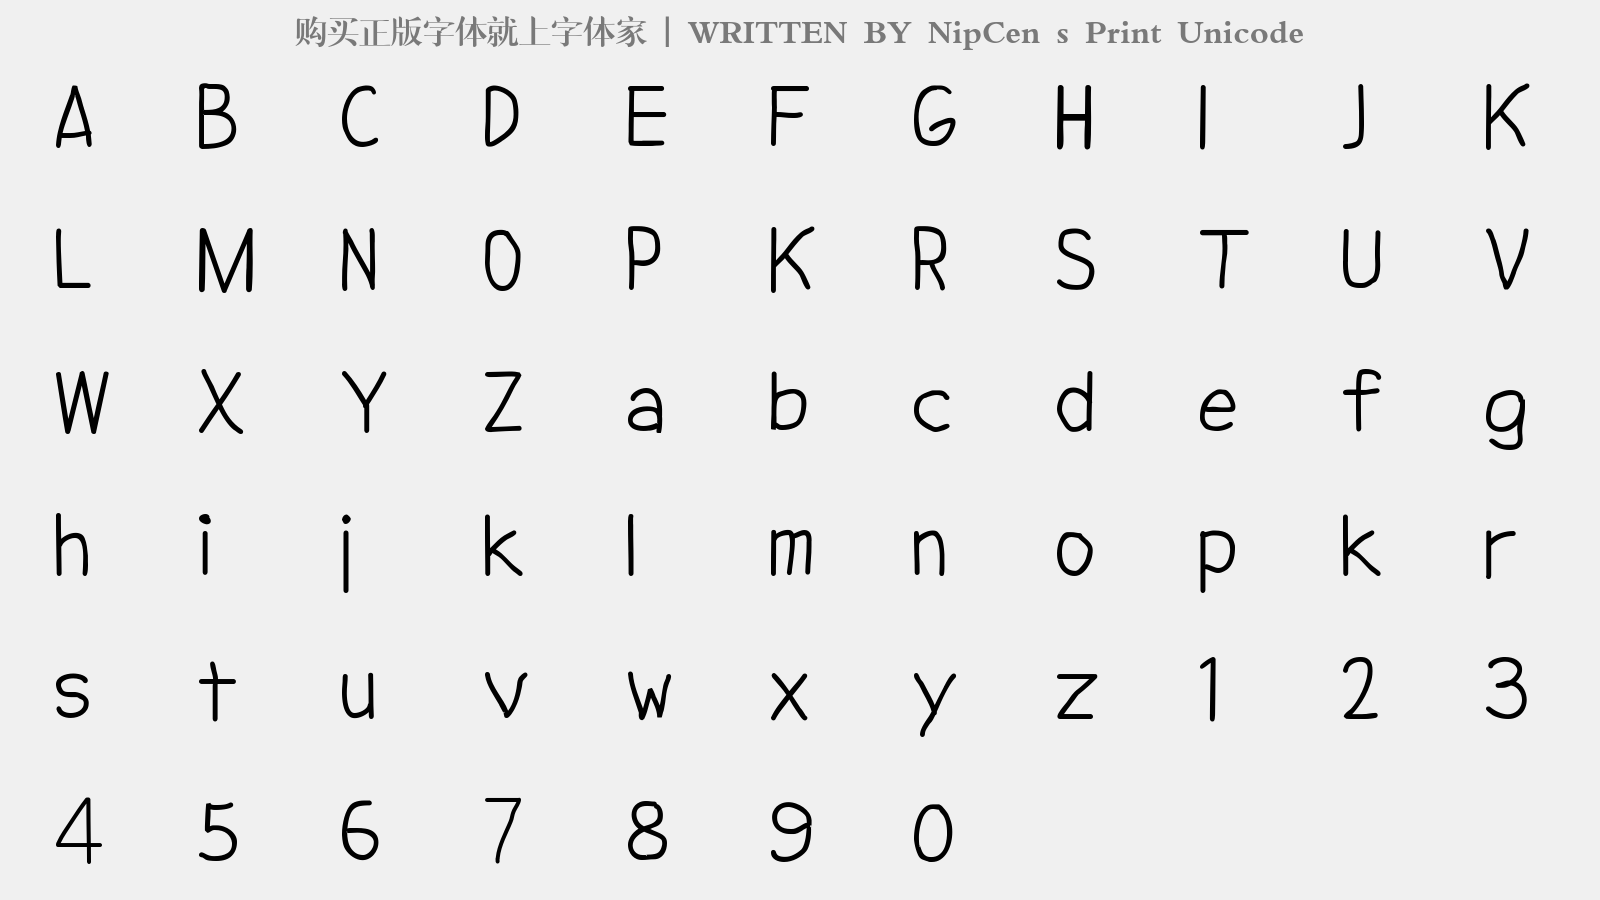 NipCen s Print Unicode - 大写字母/小写字母/数字